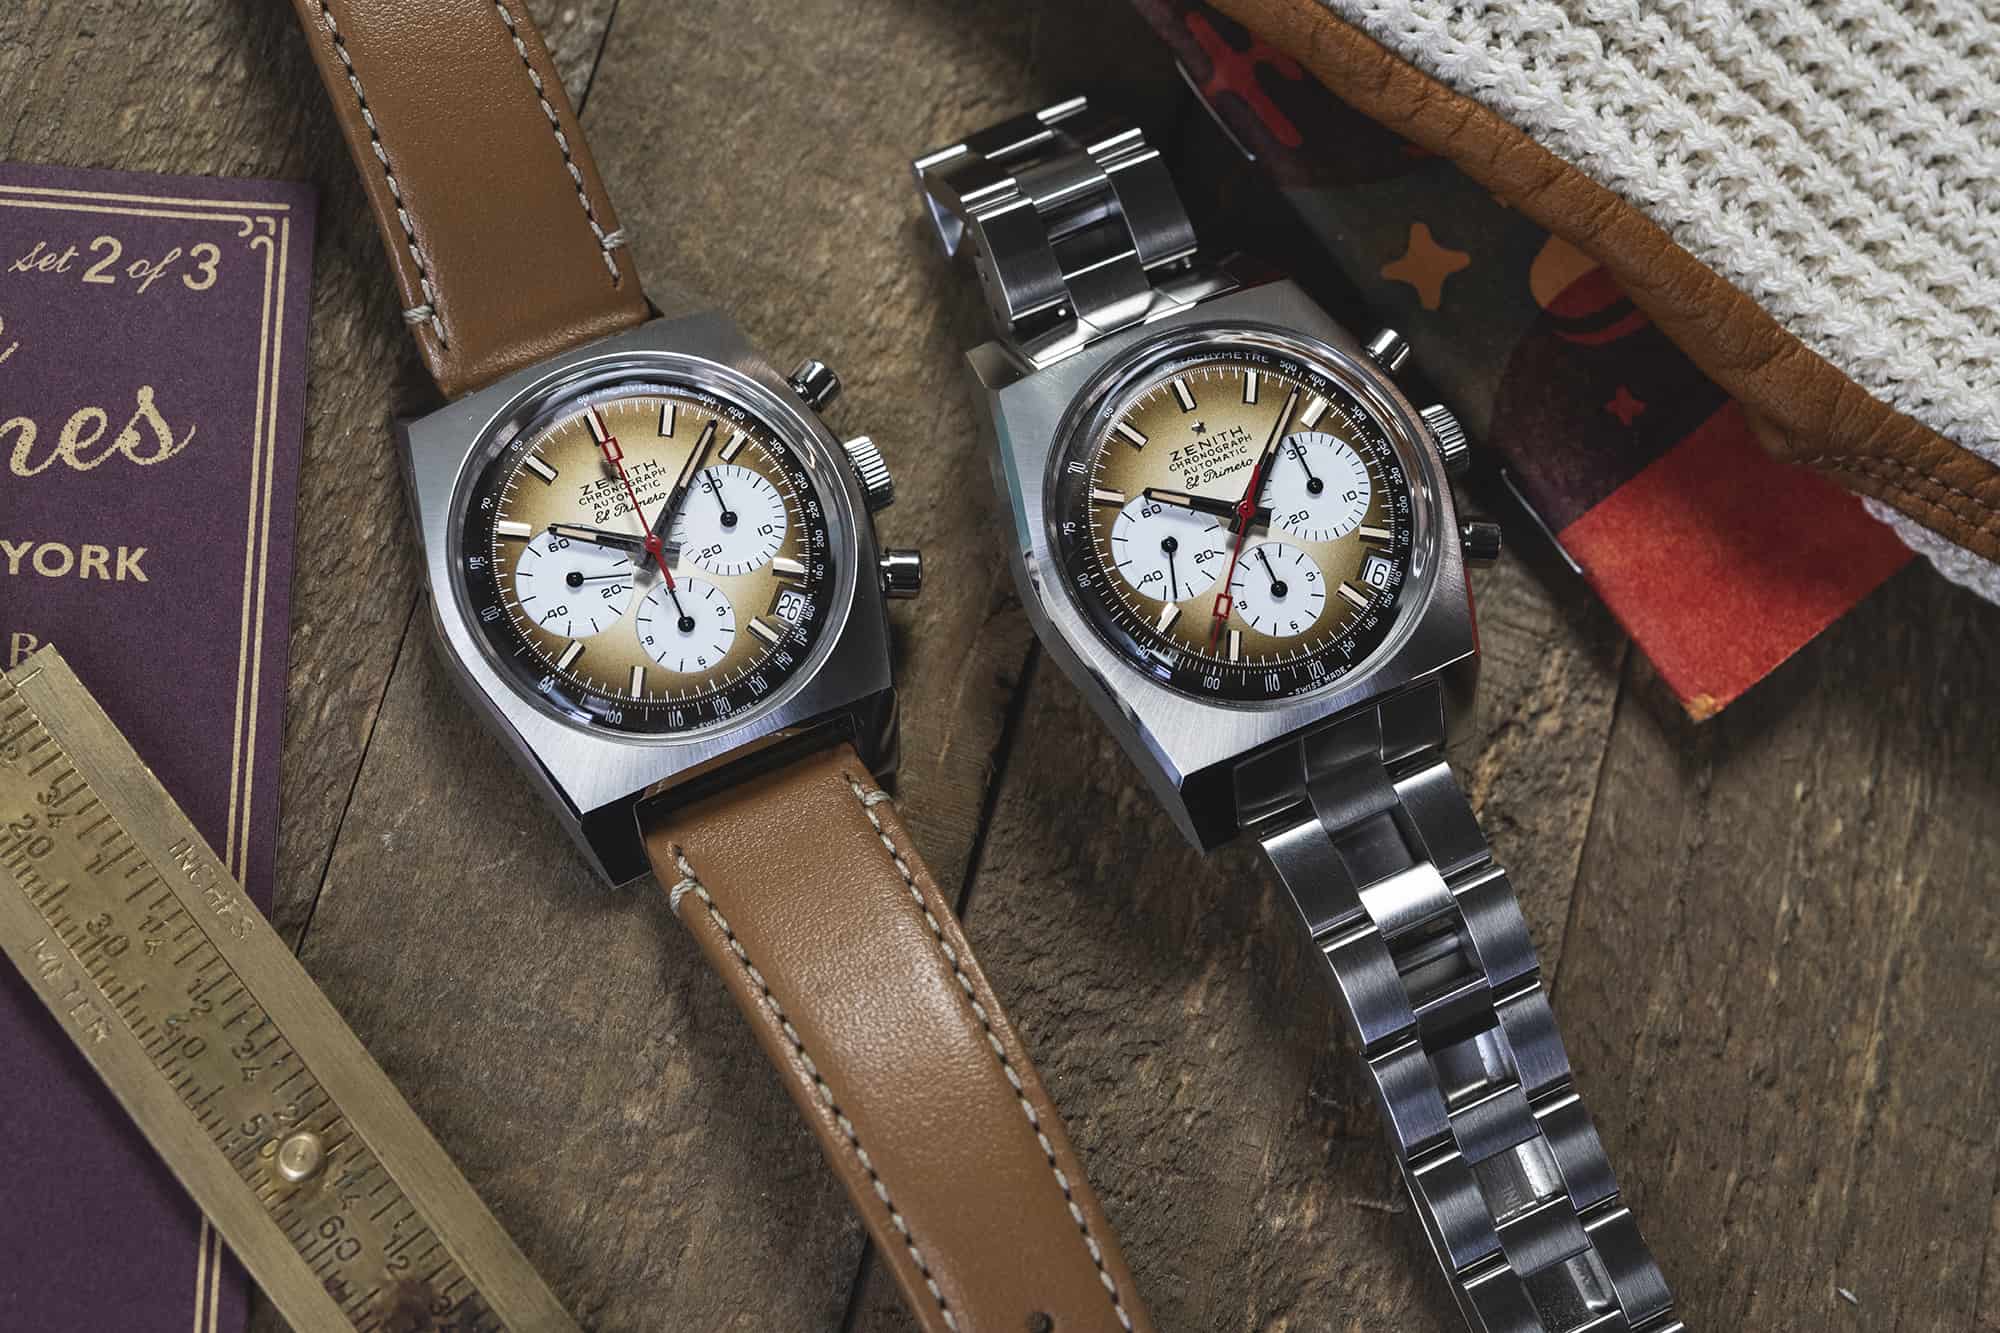 Zenith Chronomaster Revival El Primero - Watches